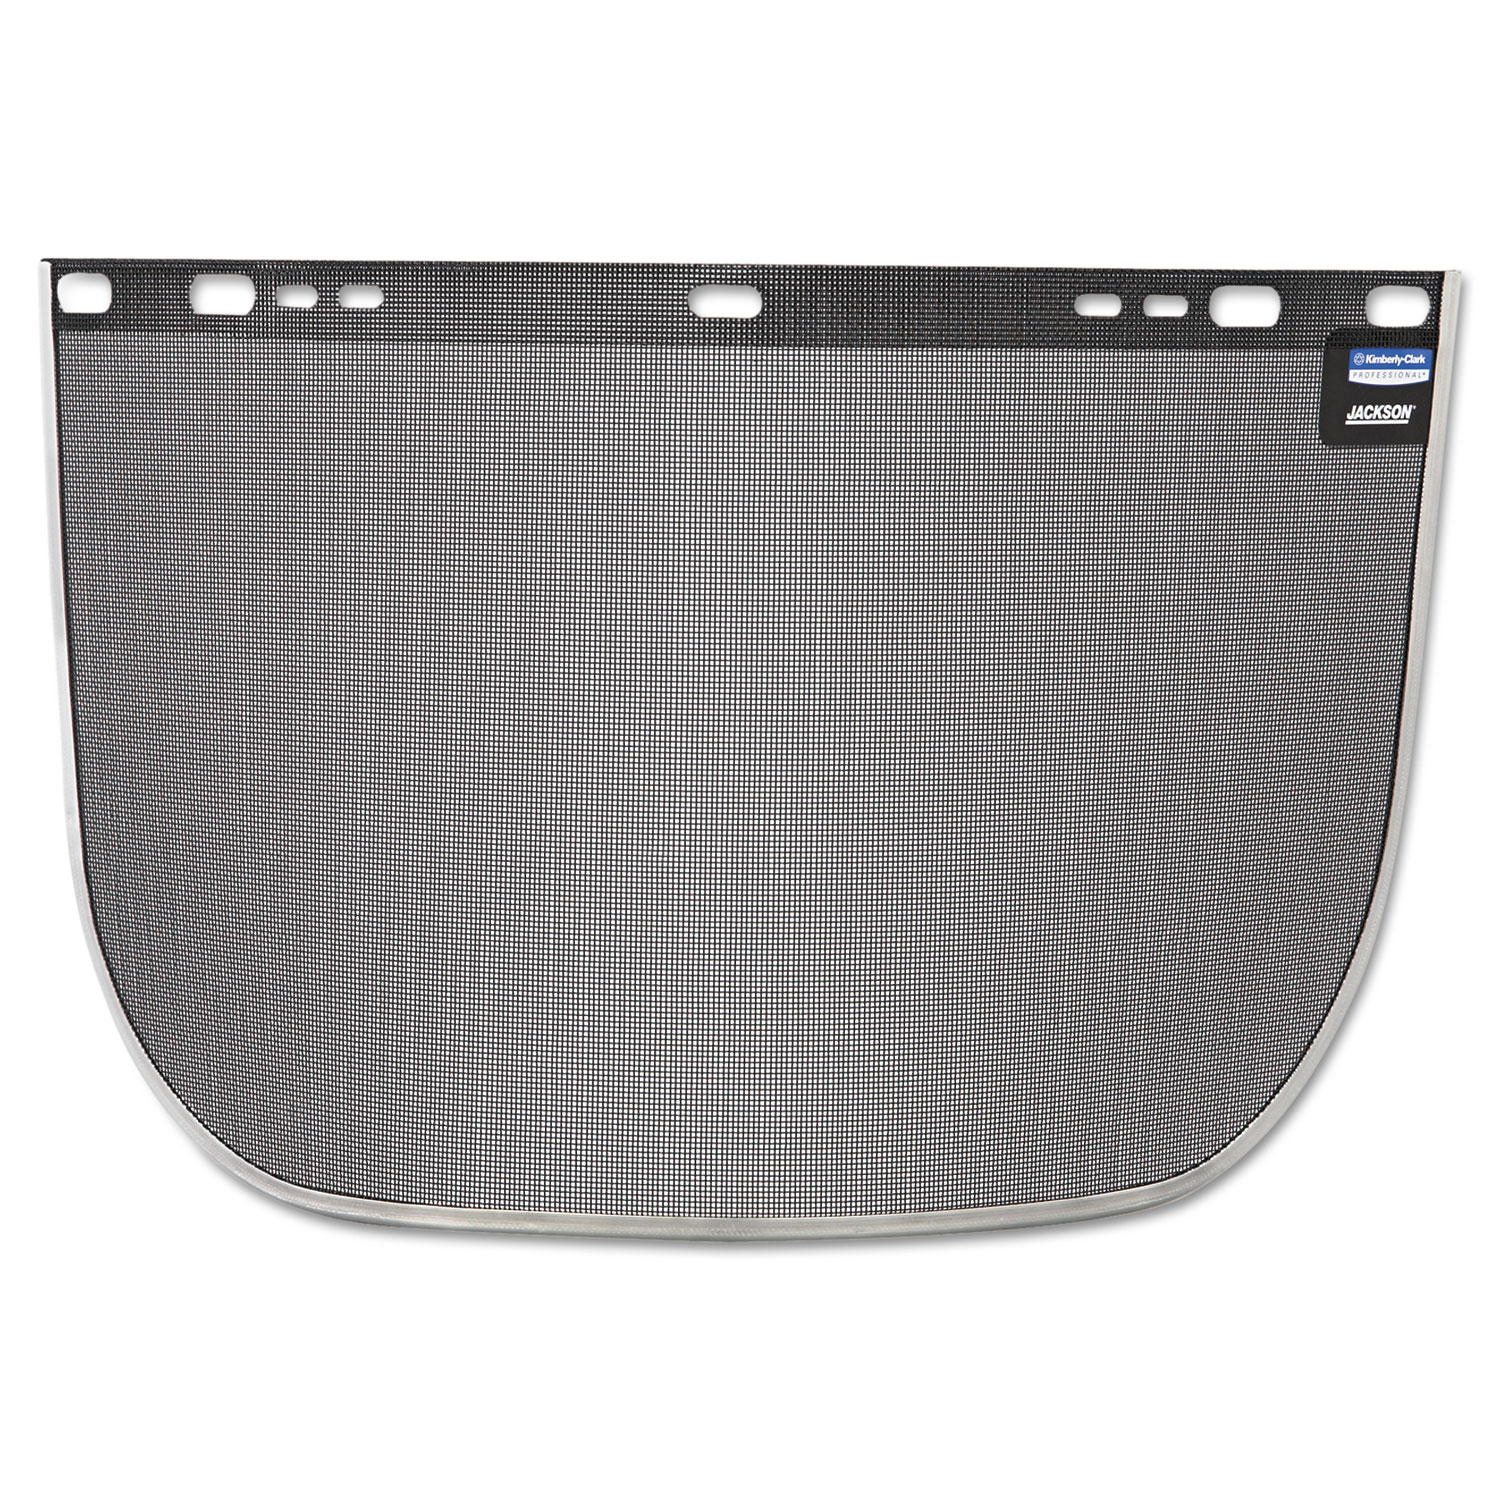 F60 Face Shield Window, 15 1/2 x 9, Steel, Black, Aluminum Bound